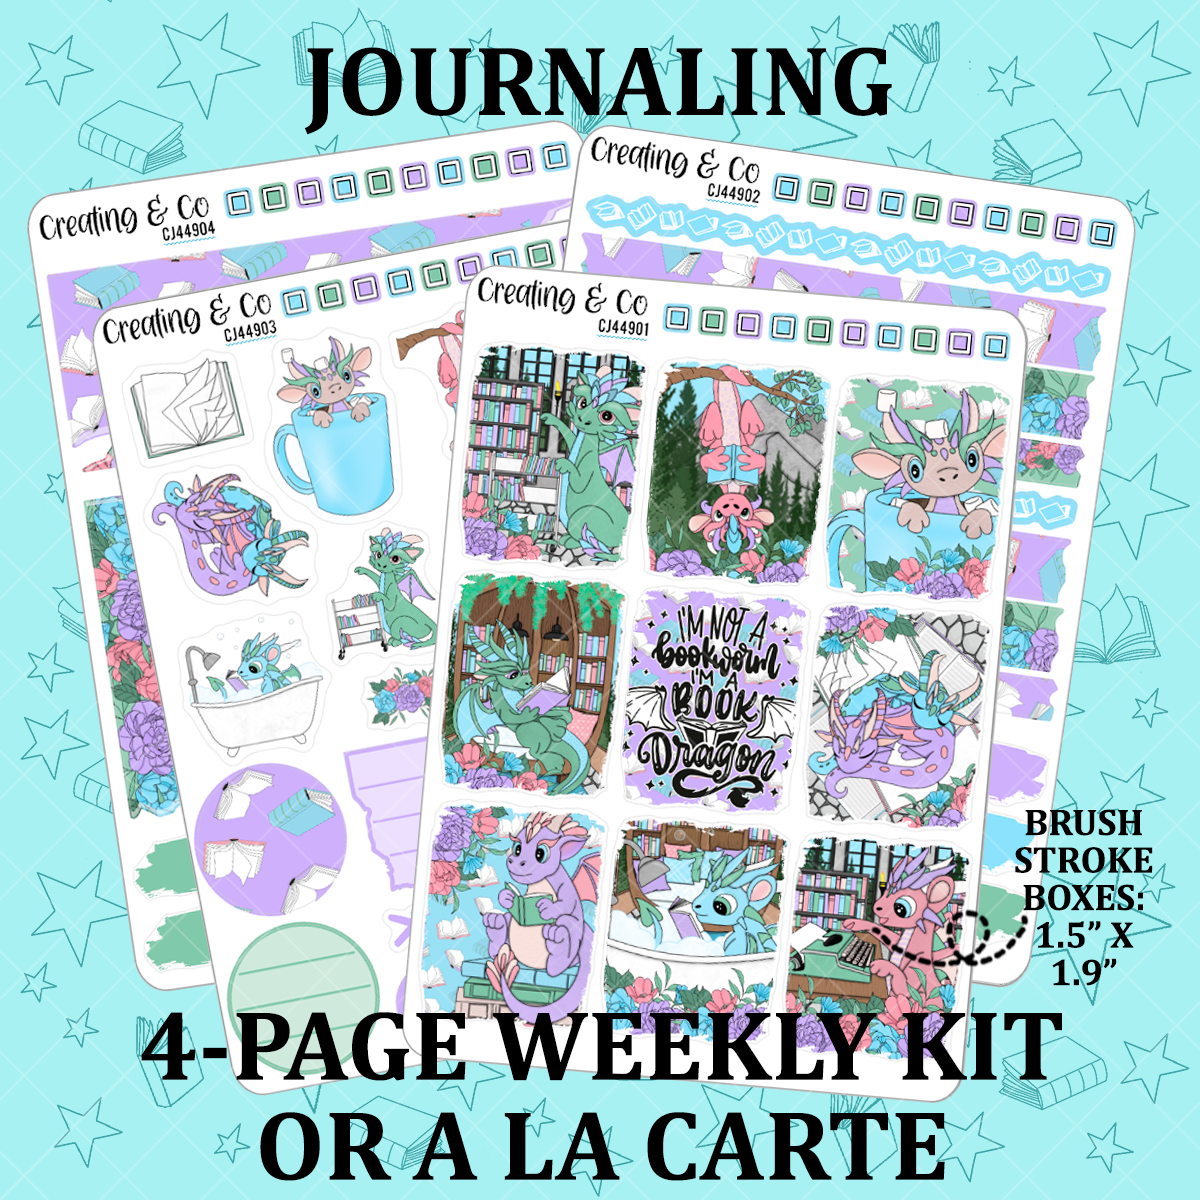 Book Dragon Creative Journaling and Planning Kit - CJ449